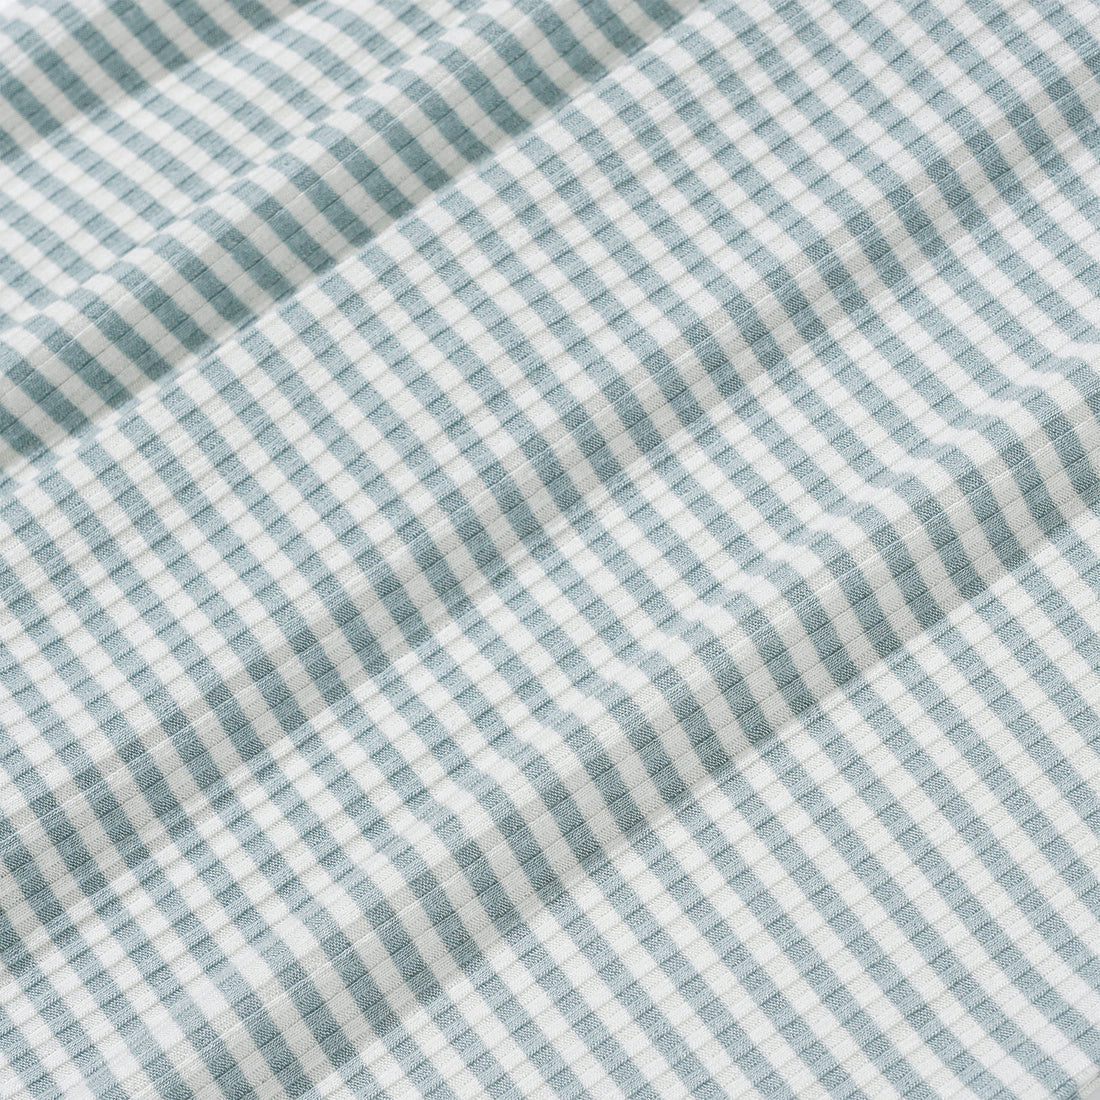 Two-Piece Bamboo Pajama Set | Blue Small Stripe